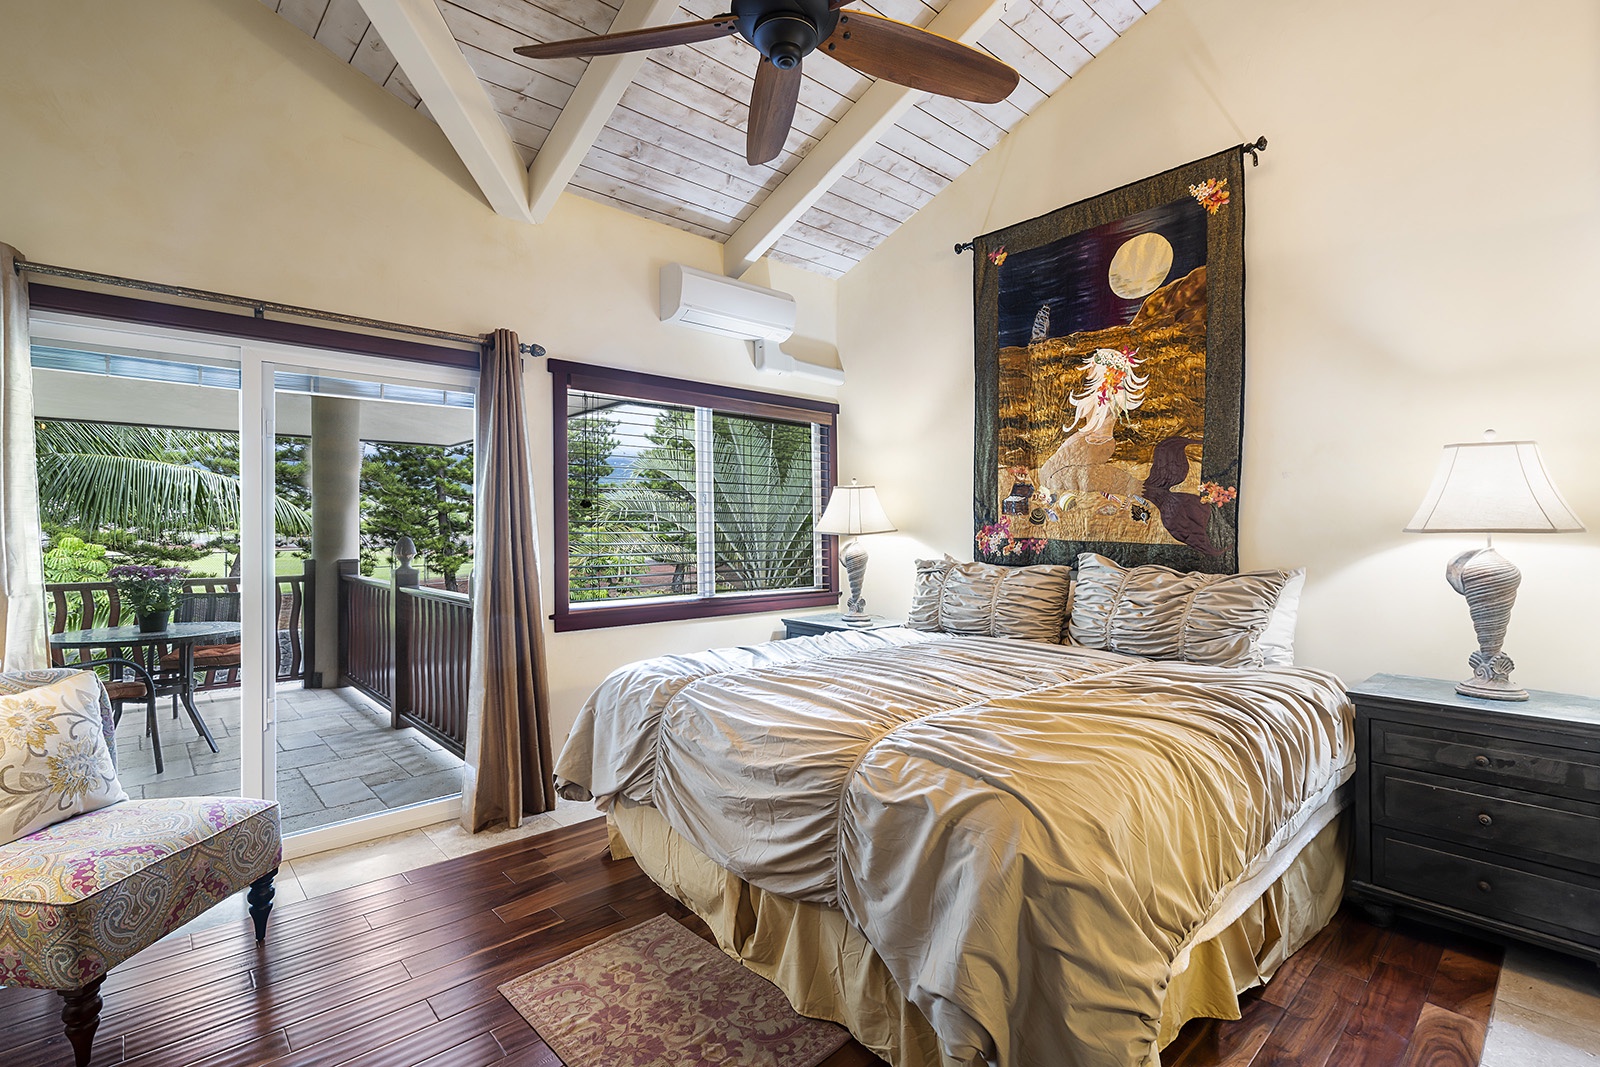 Kailua Kona Vacation Rentals, Mermaid Cove - Guest bedroom on the main level